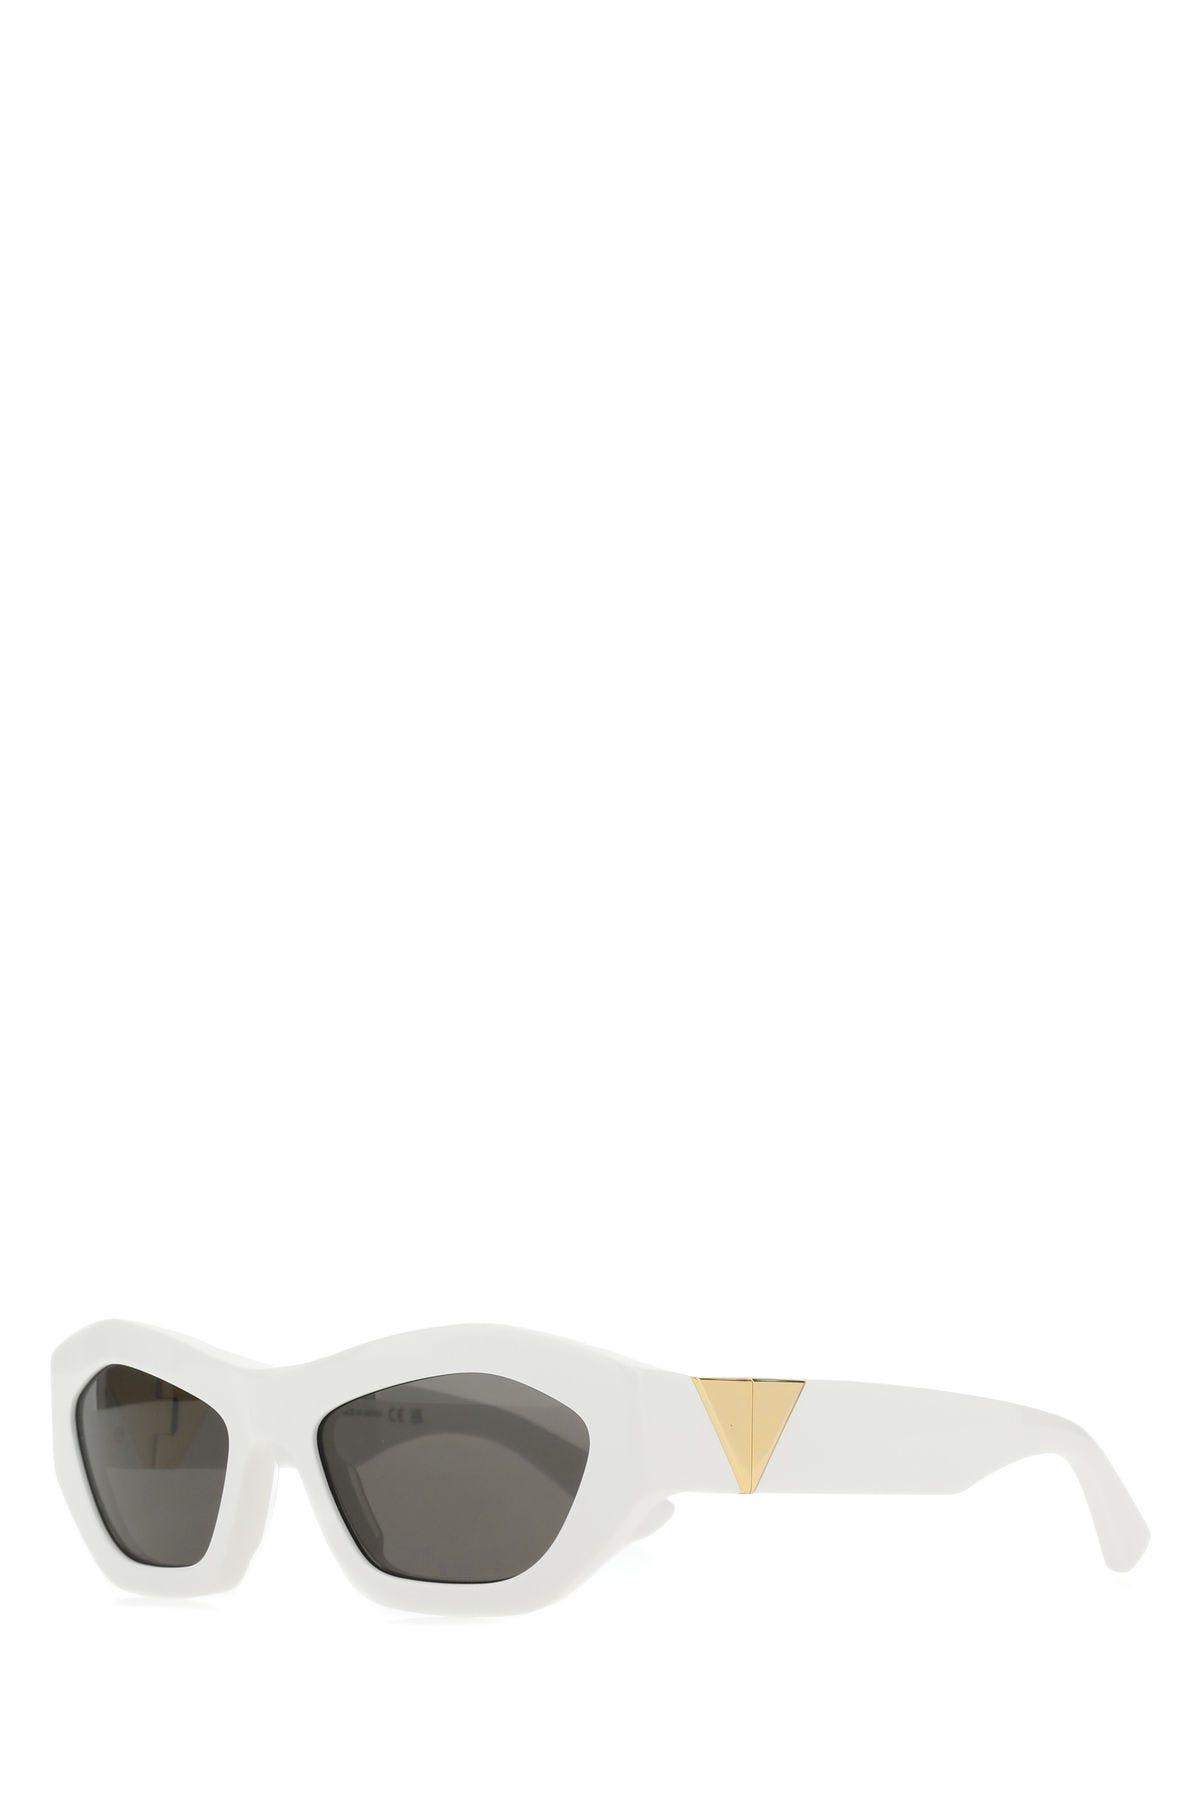 Bottega Veneta Eyewear White Acetate Angle Sunglasses